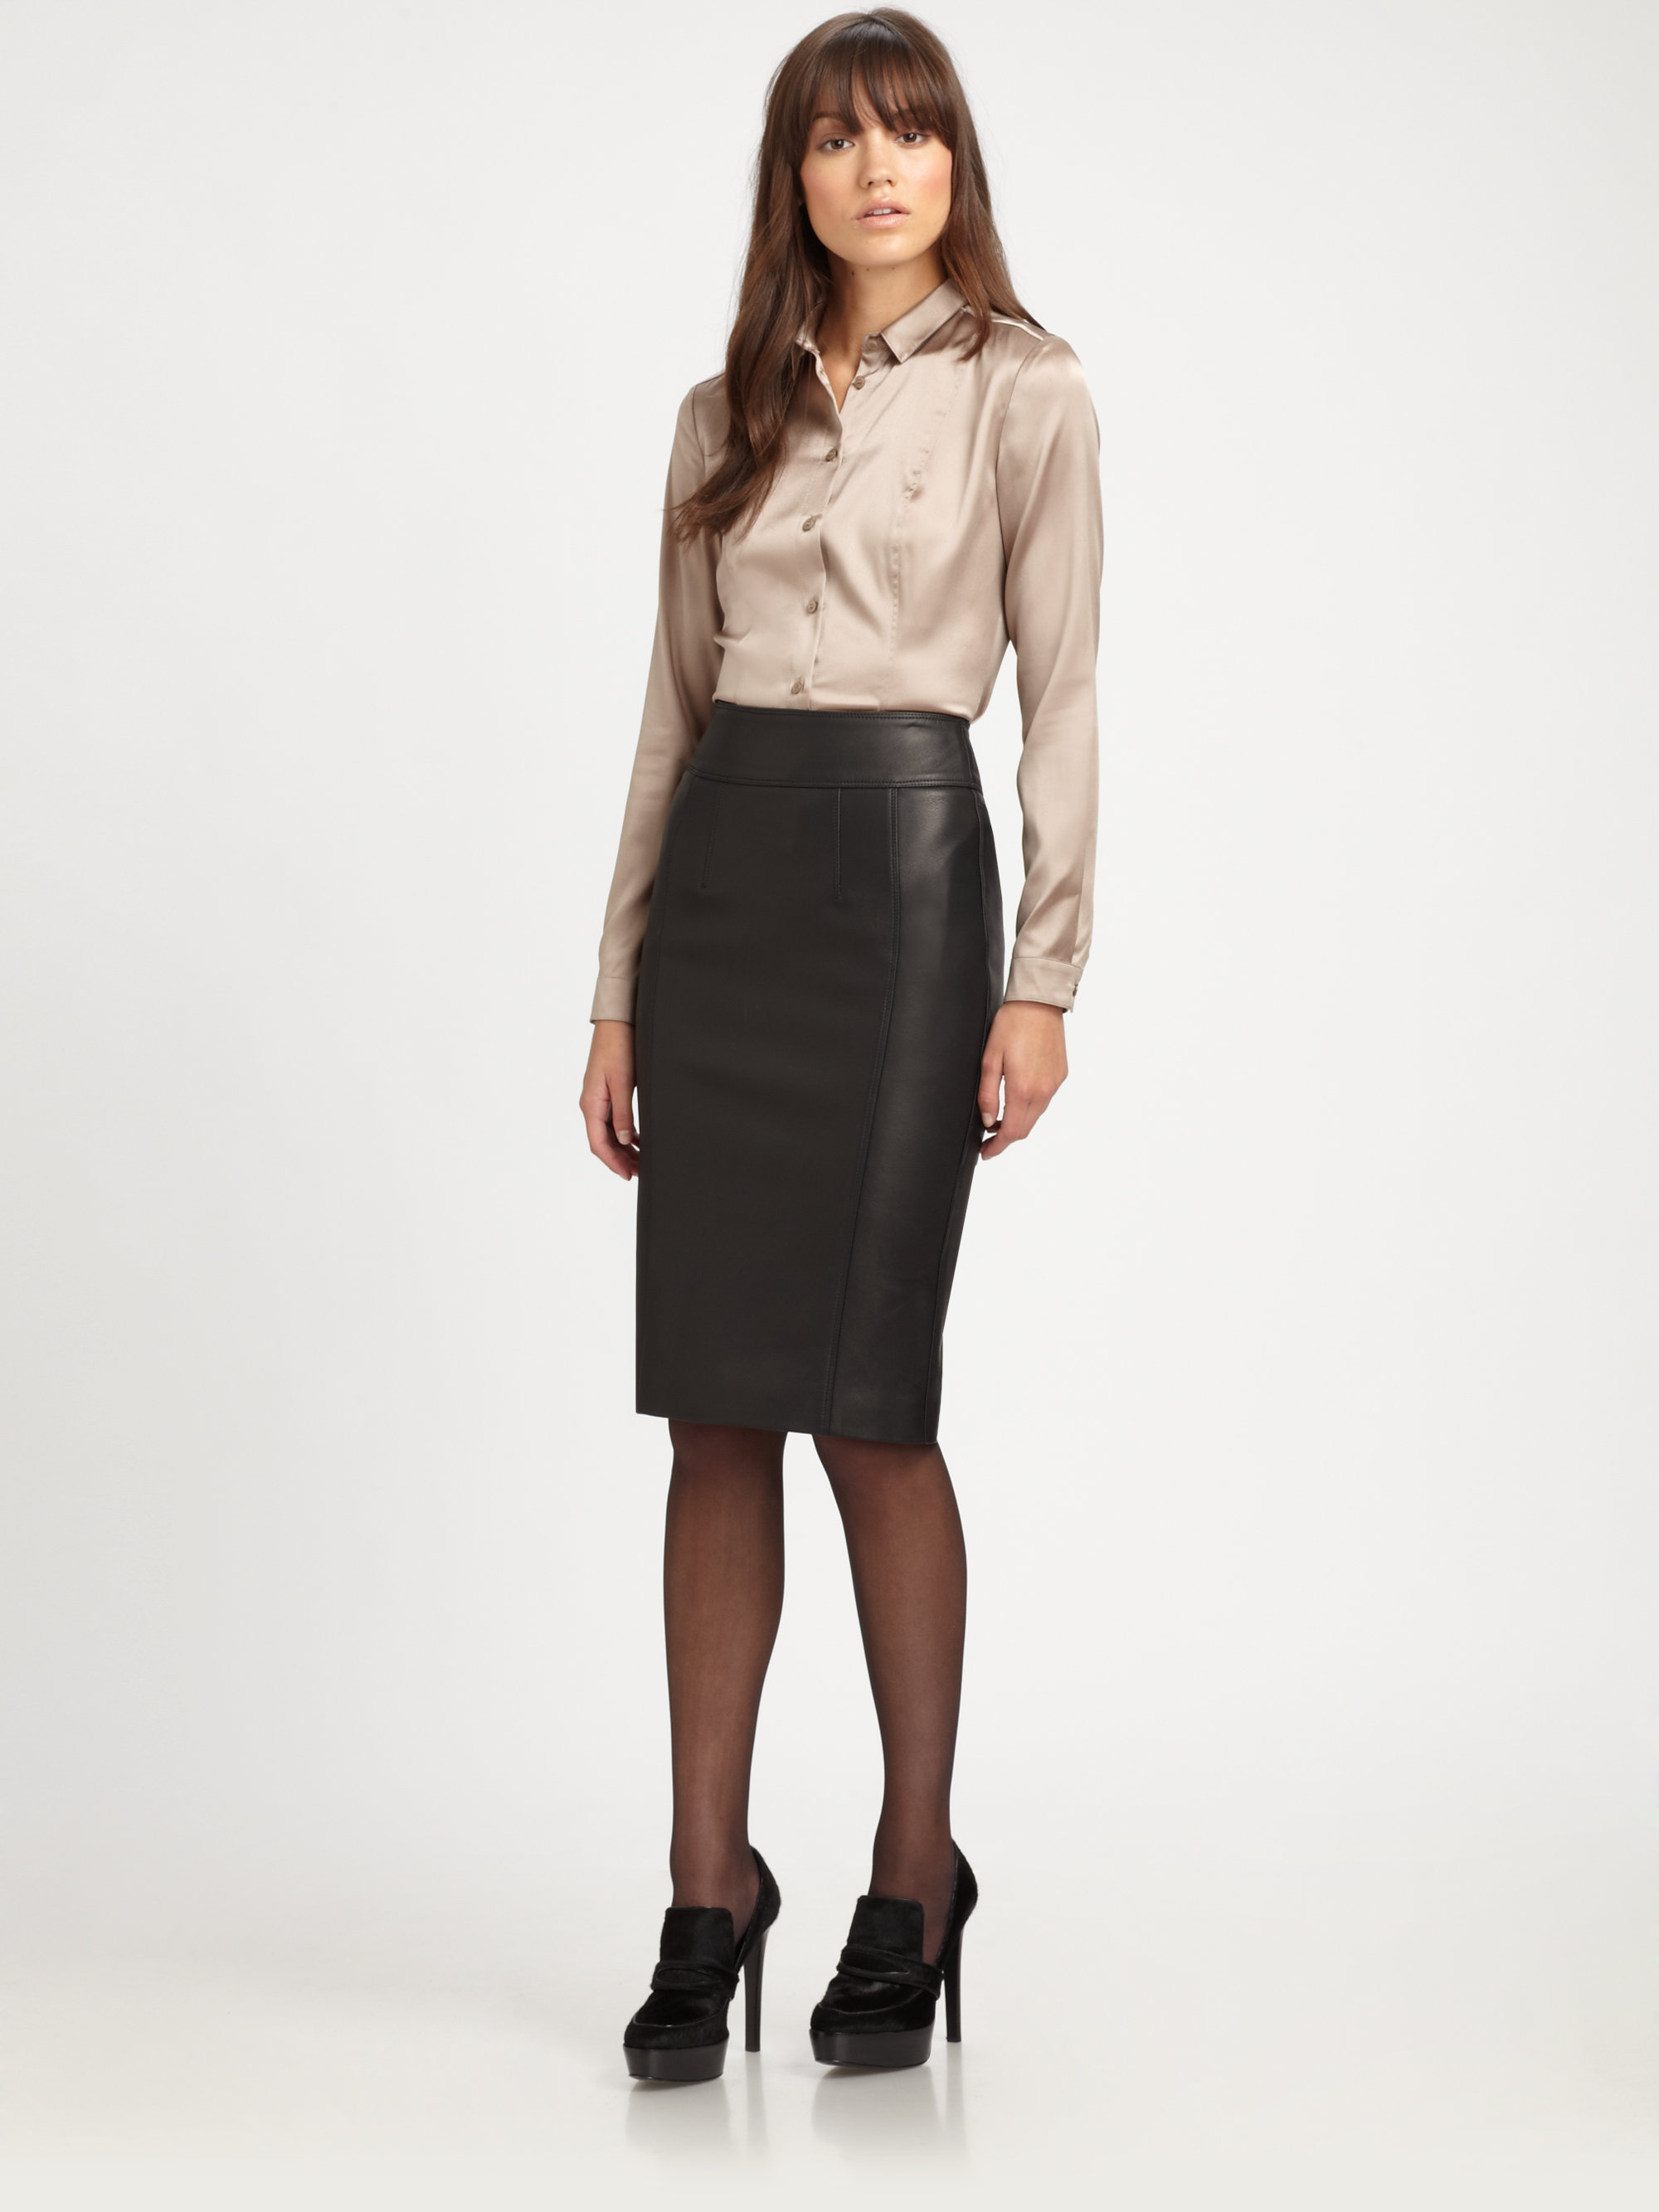 Leather Pencil Skirt Versatile Lasting And Fashionable Styleskier Com